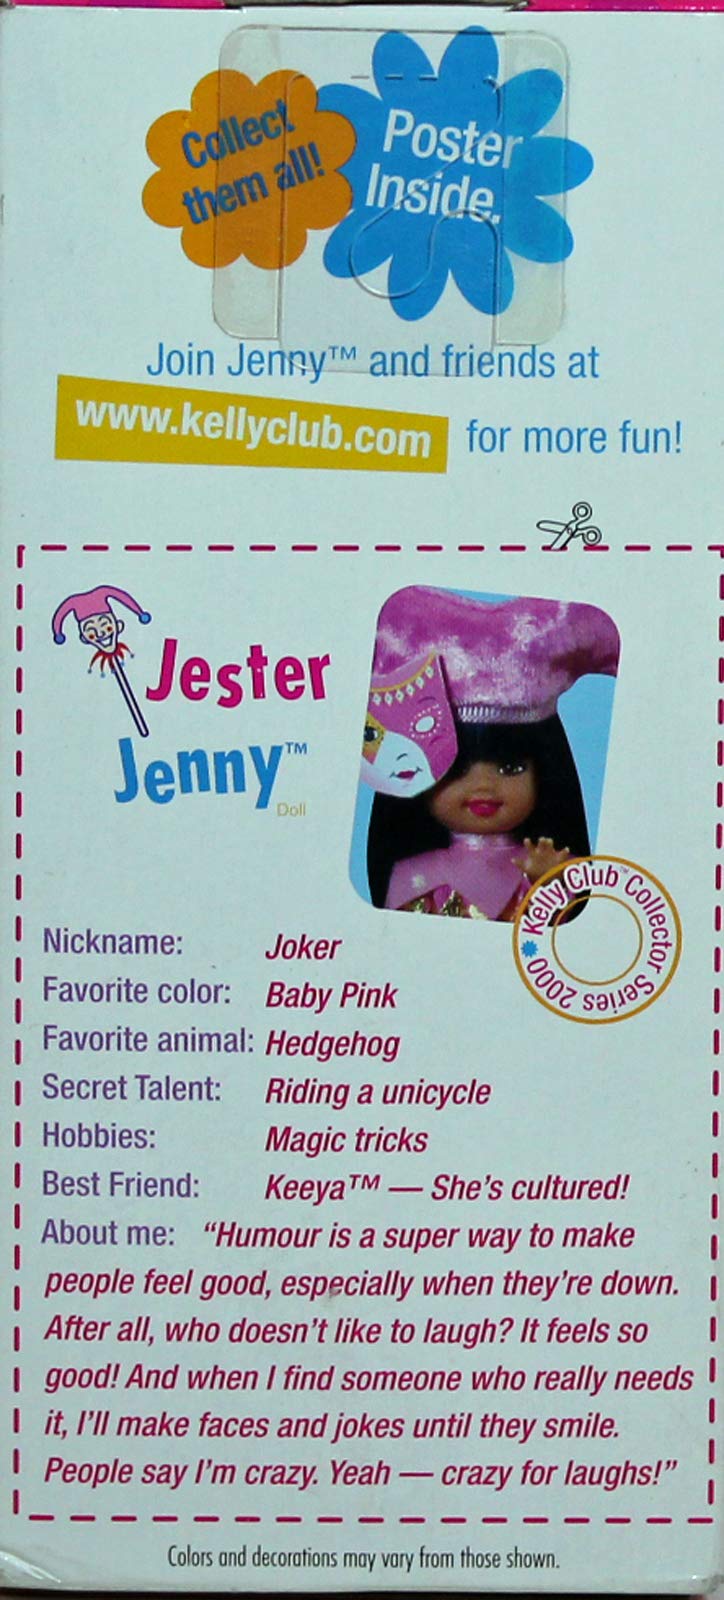 Mattel Barbie Jester Jenny Doll Kelly Club (1999 from Canada)